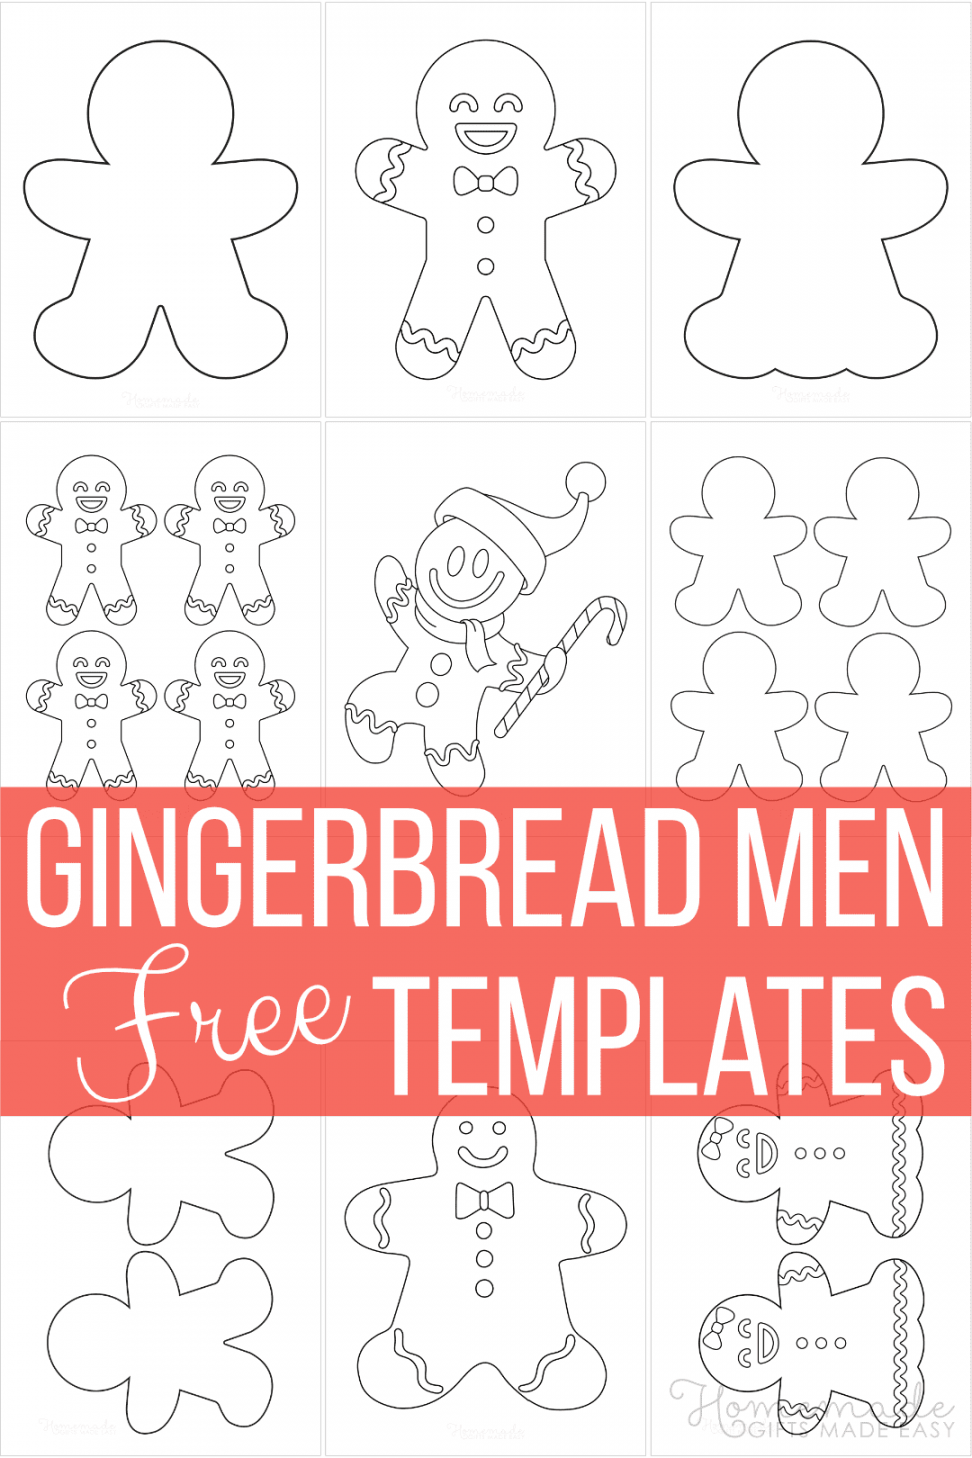 Free Printable Gingerbread Man Templates & Coloring Pages - FREE Printables - Gingerbread Man Template Free